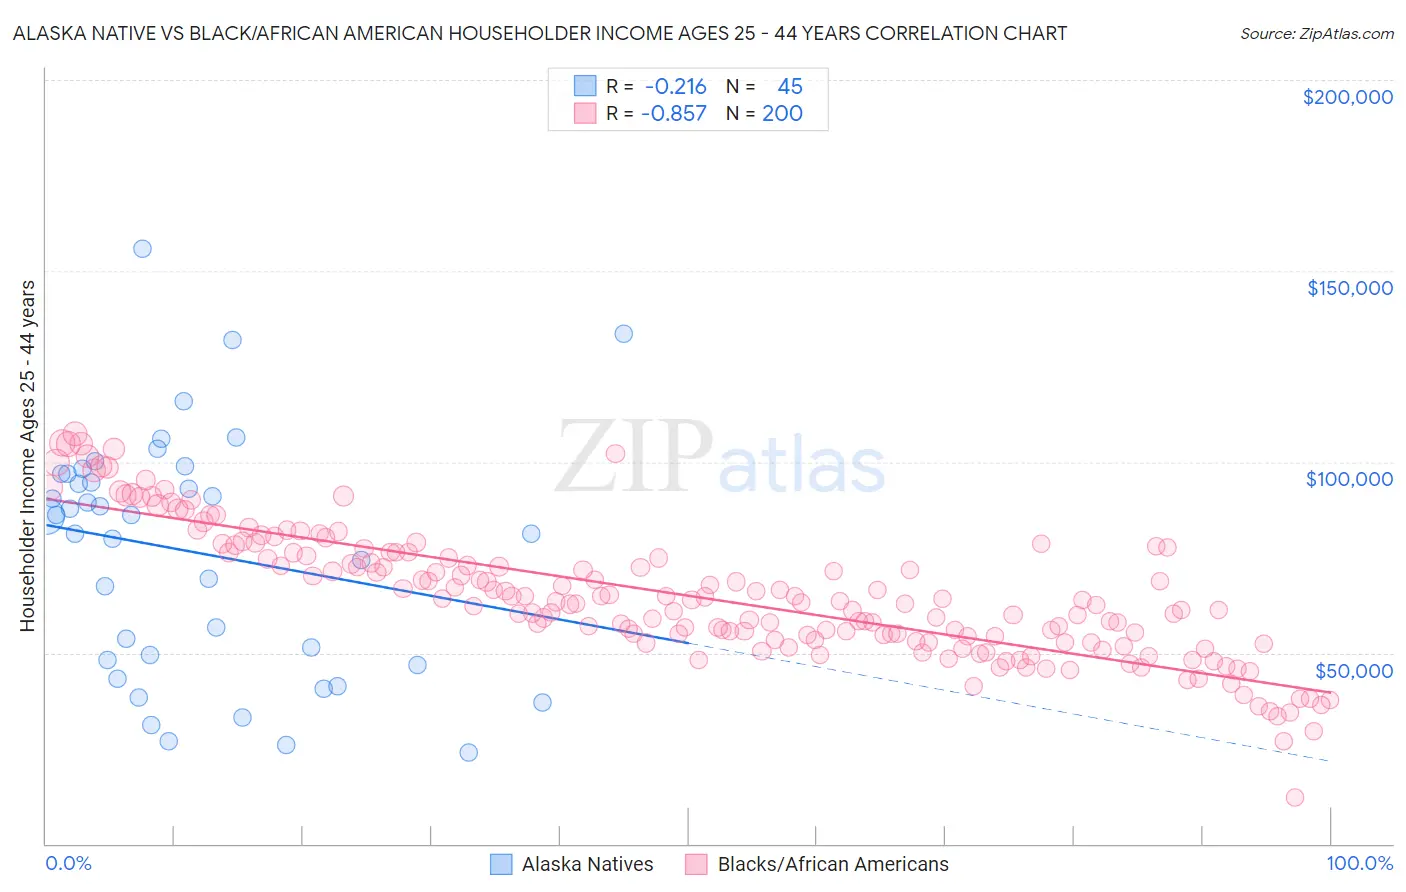 Alaska Native vs Black/African American Householder Income Ages 25 - 44 years